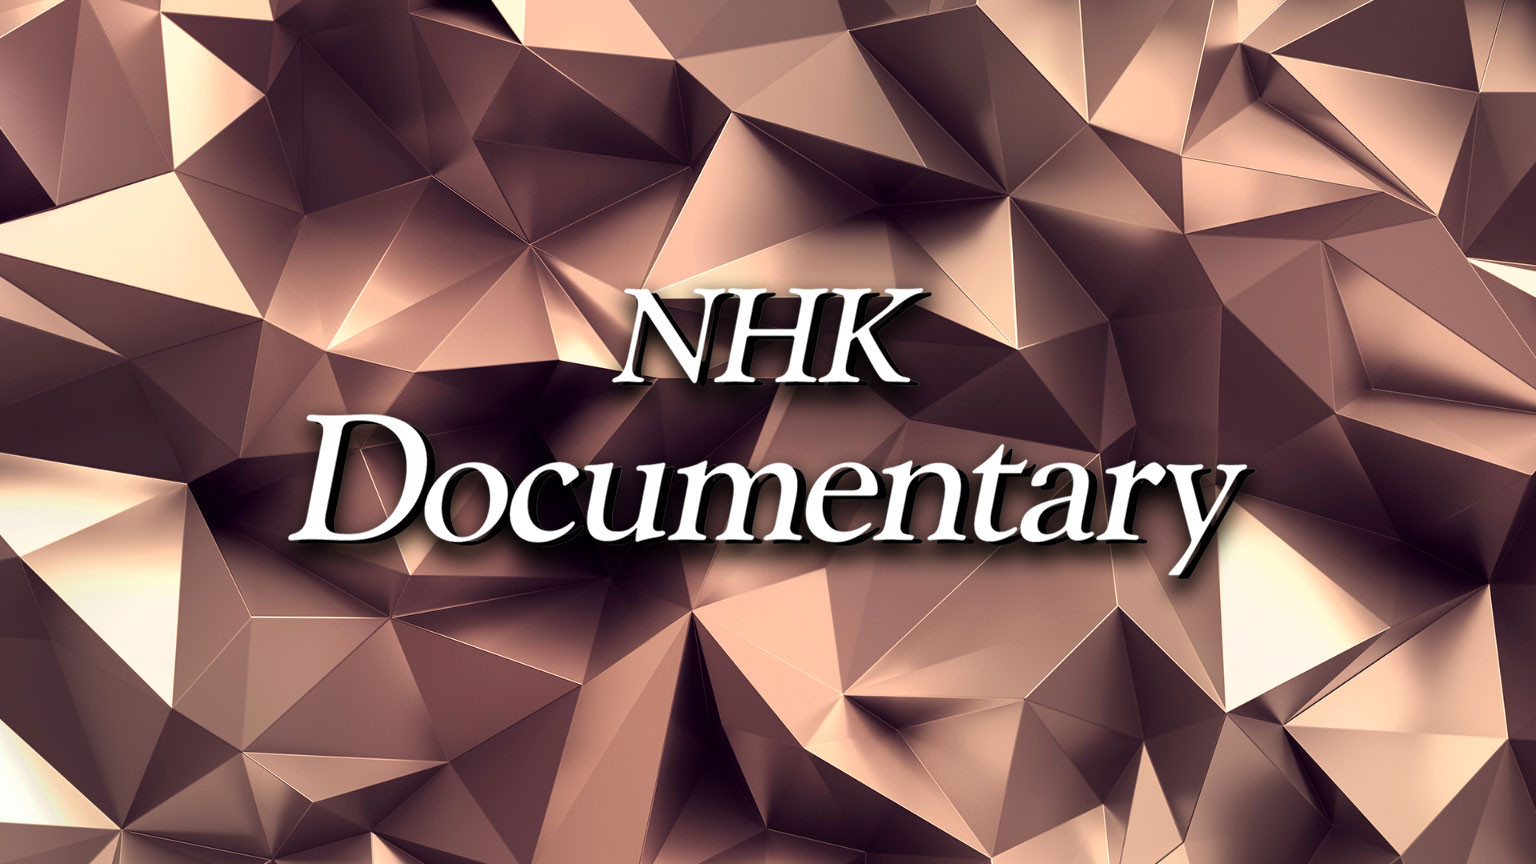 Документалистика NHK
NHK Documentary